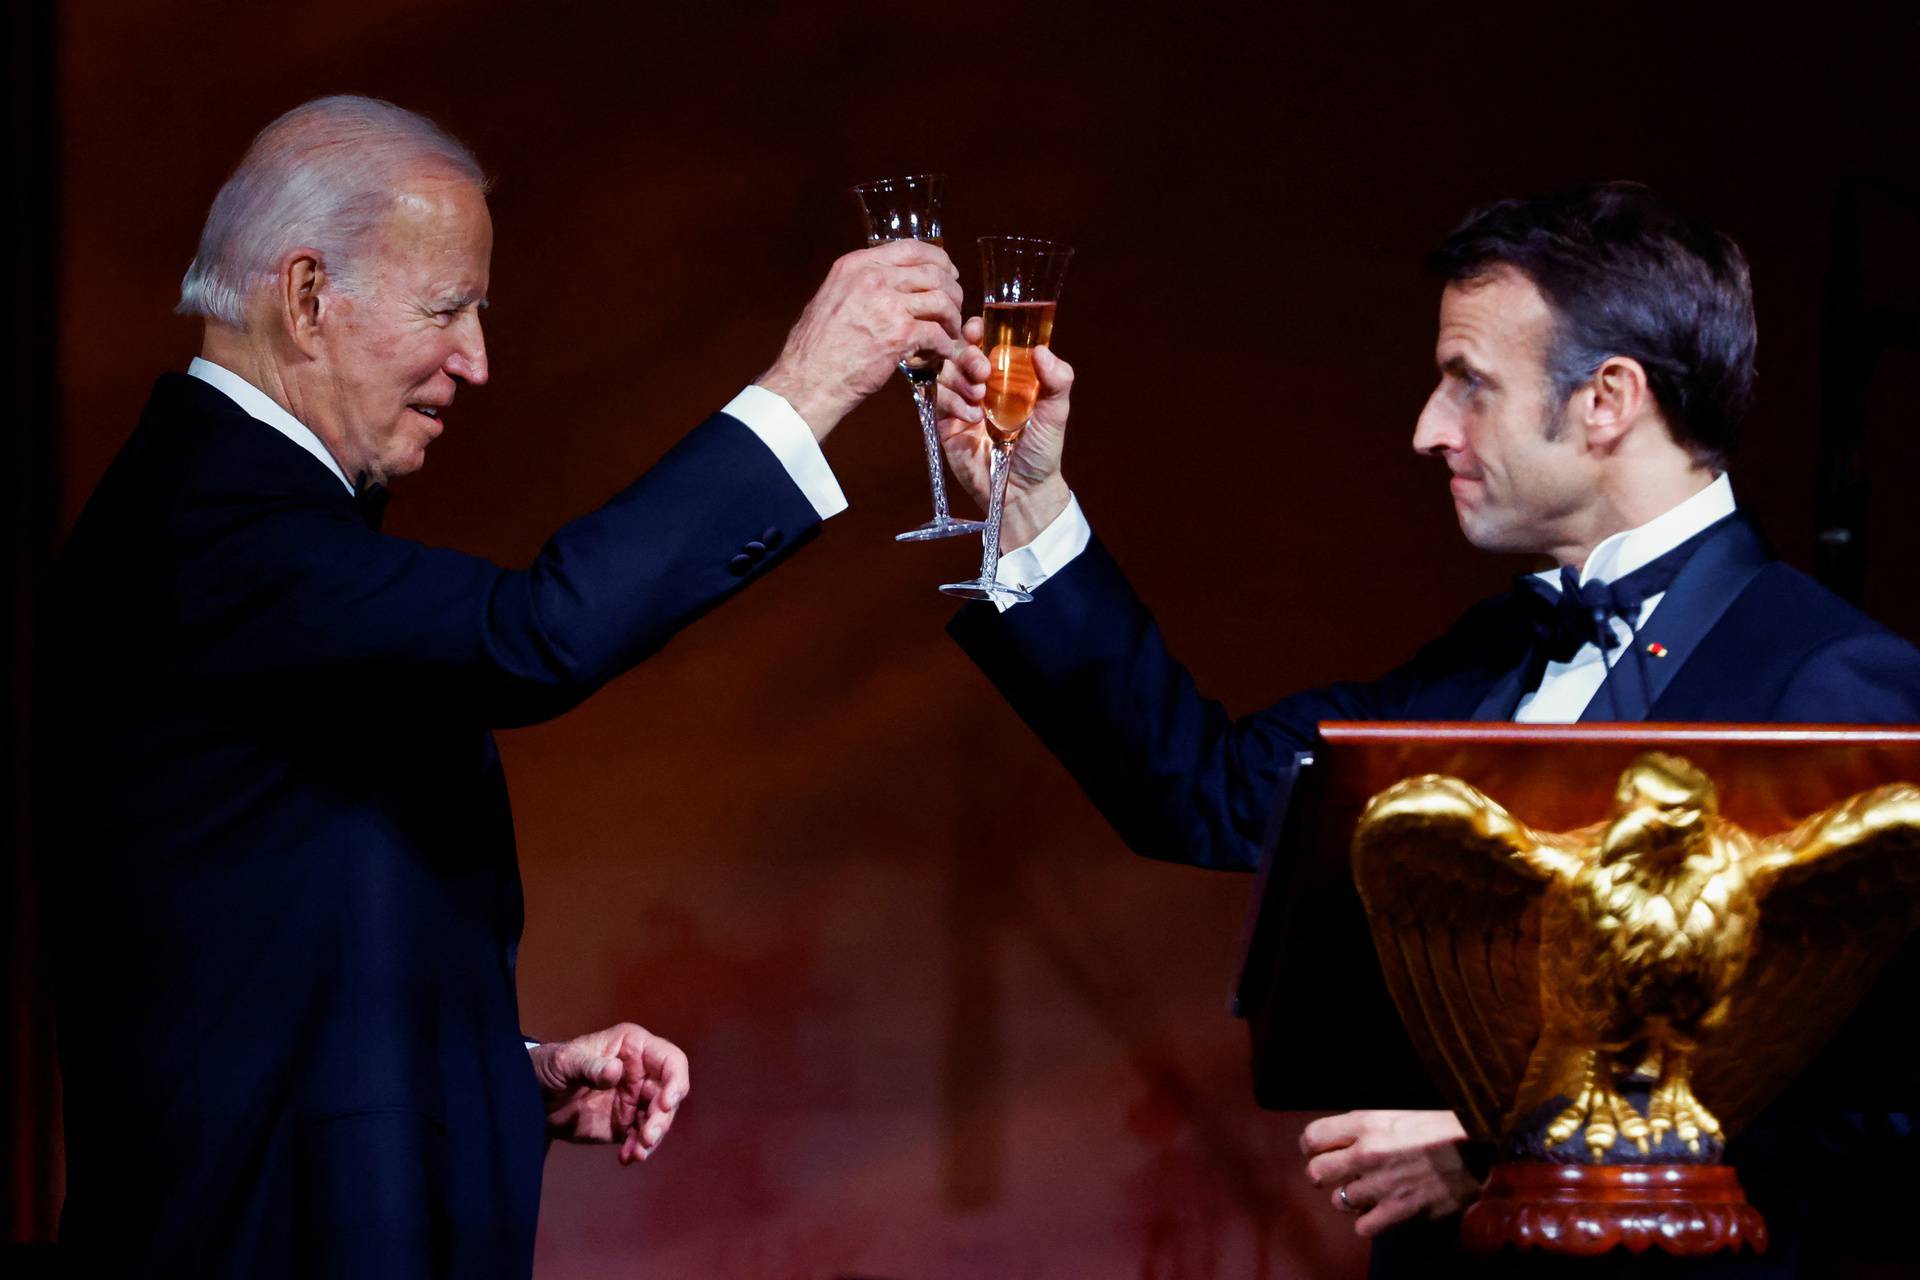 U.S. President Joe Biden hosts French President Emmanuel Macron at White House for state visit